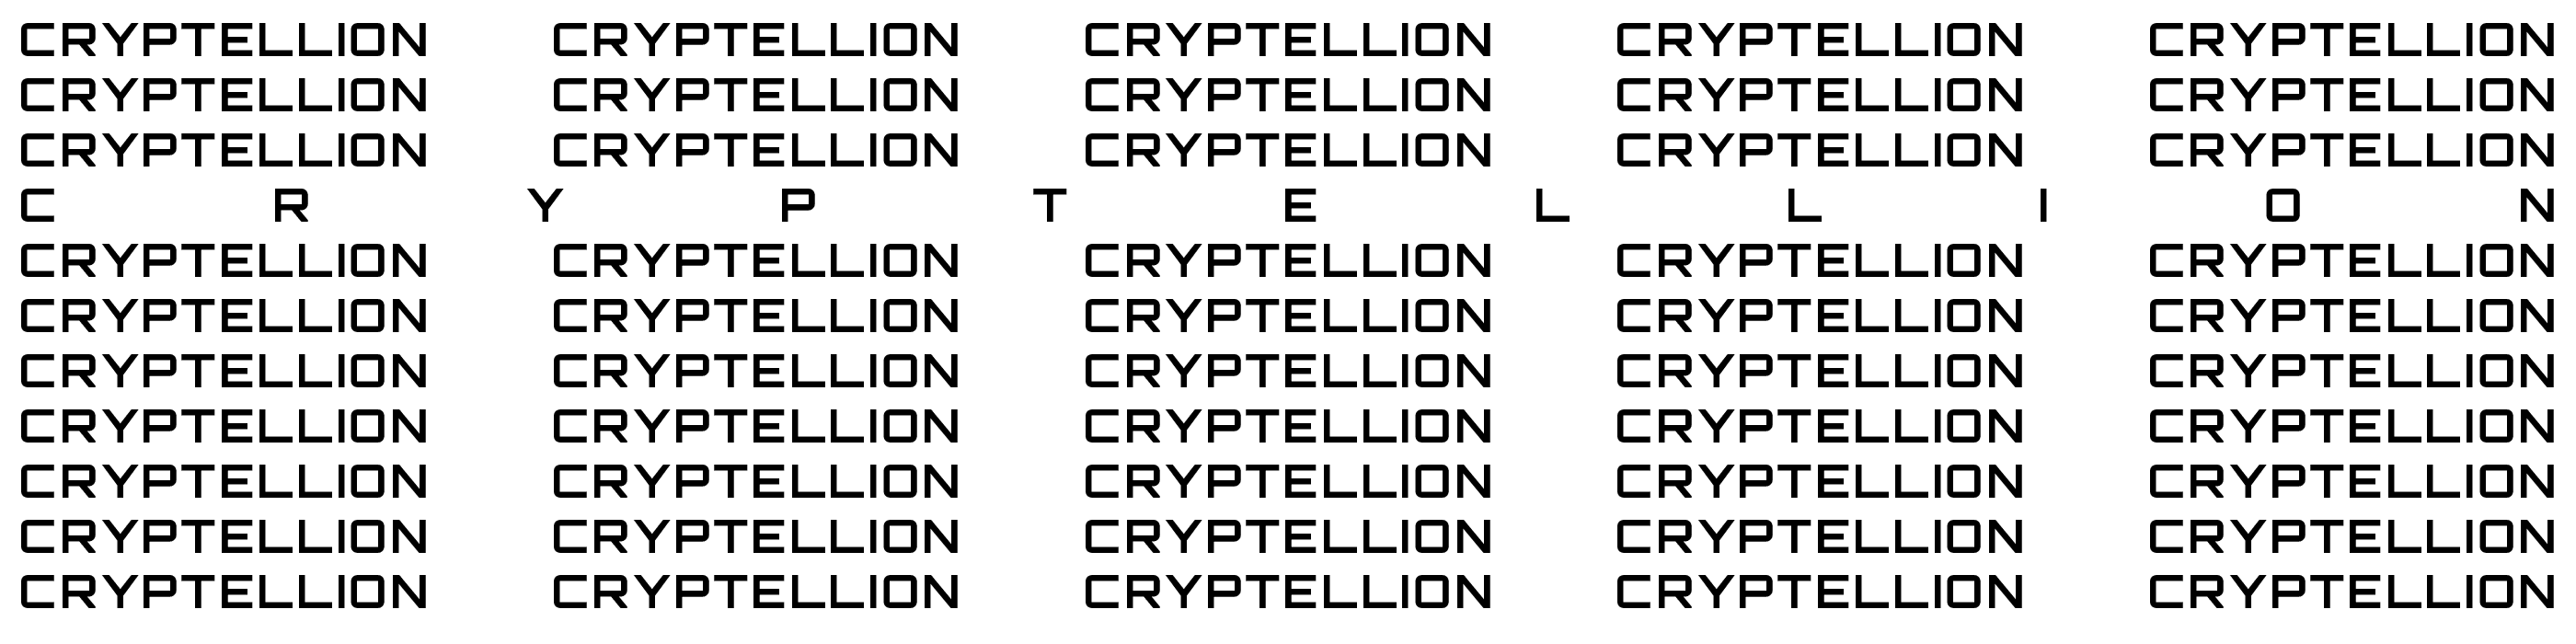 Cryptellion banner